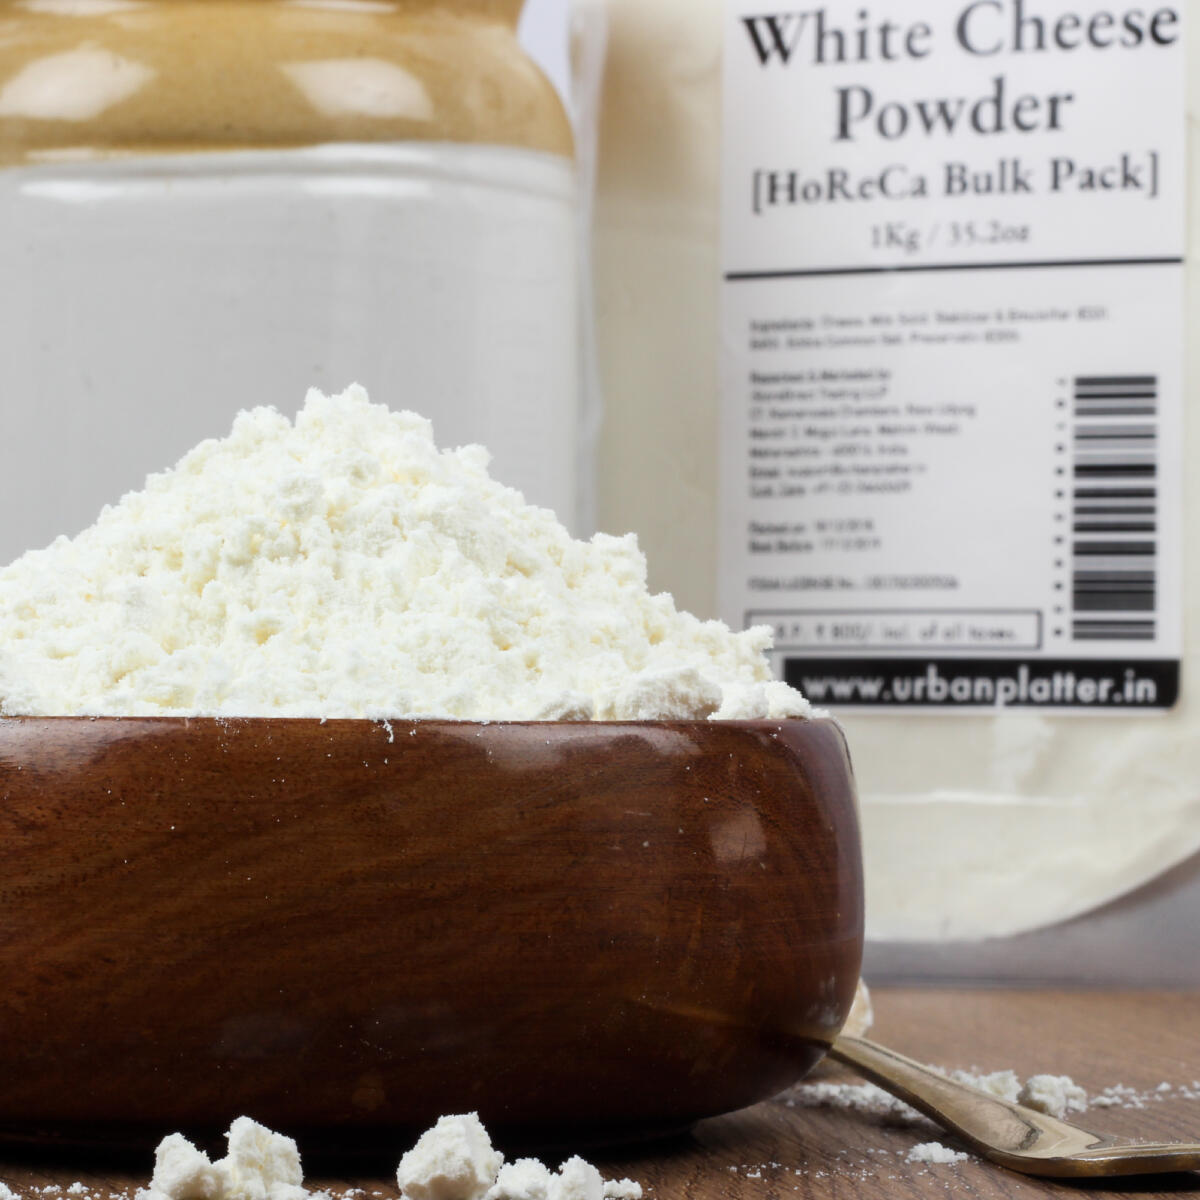 Urban Platter White Cheese Powder 1kg 35 2oz Premium Quality